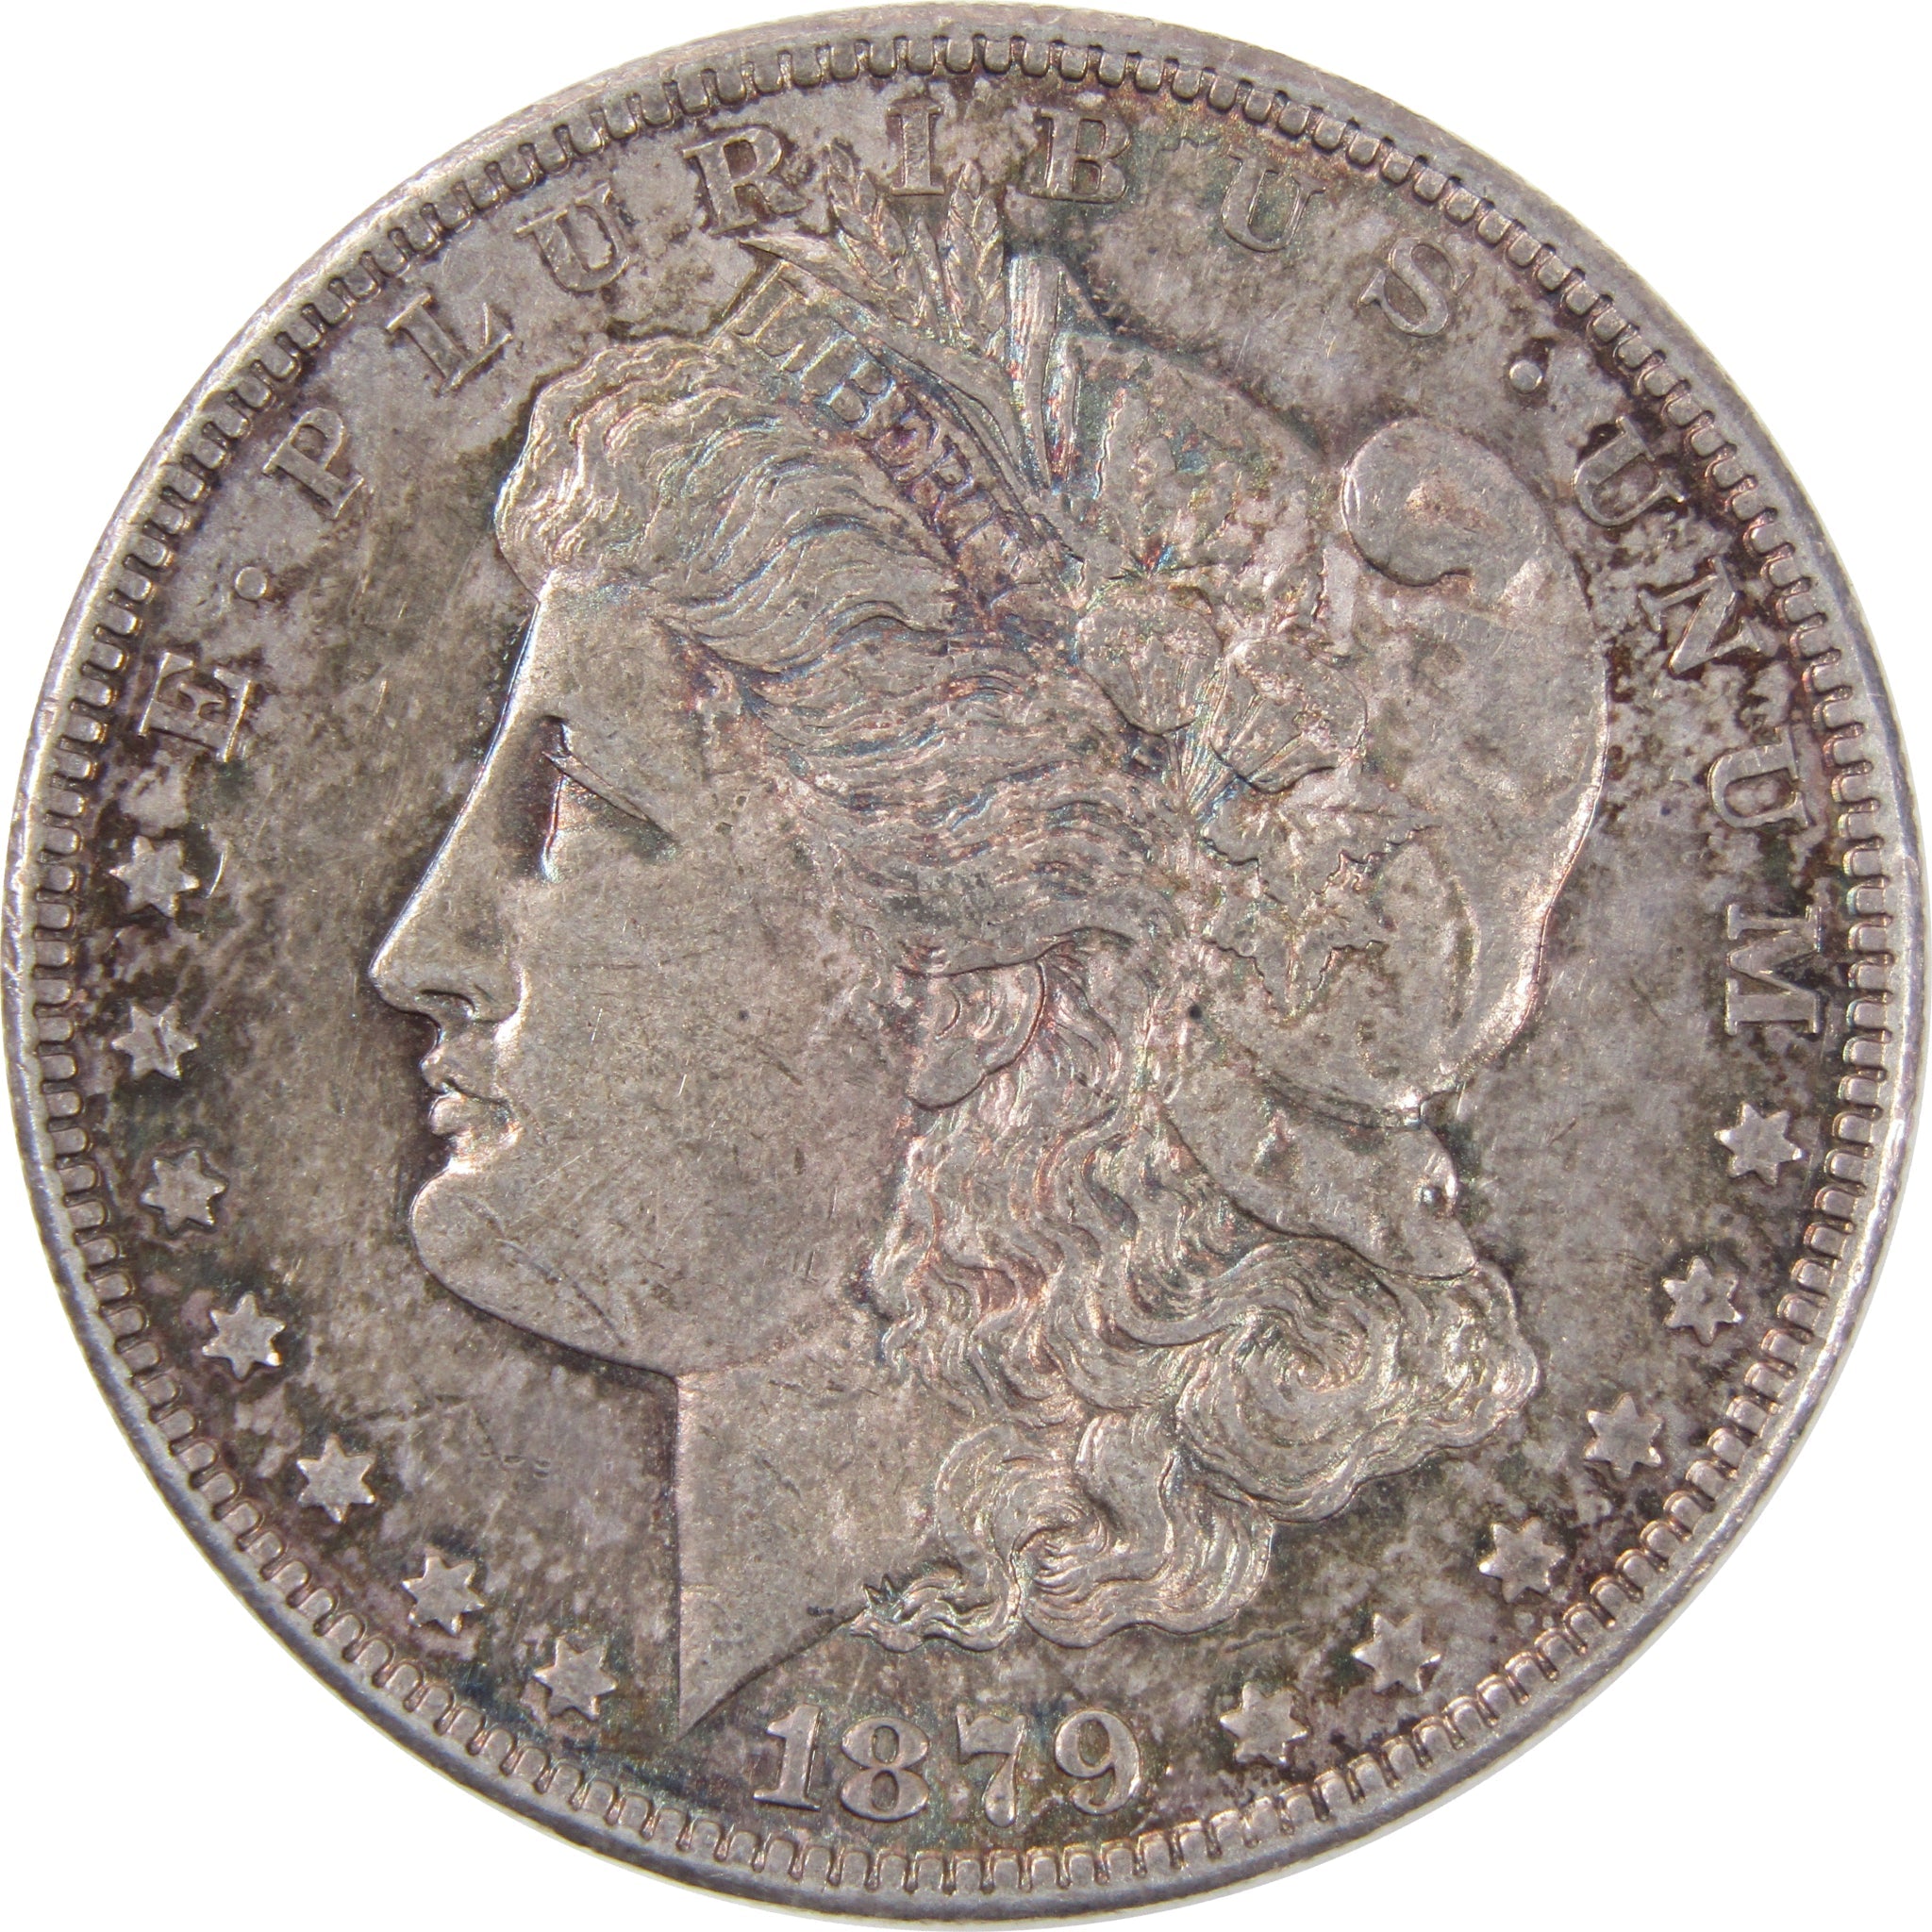 1879 S Rev 78 Morgan Dollar CH AU Choice About Uncirculated SKU:I2494 - Morgan coin - Morgan silver dollar - Morgan silver dollar for sale - Profile Coins &amp; Collectibles